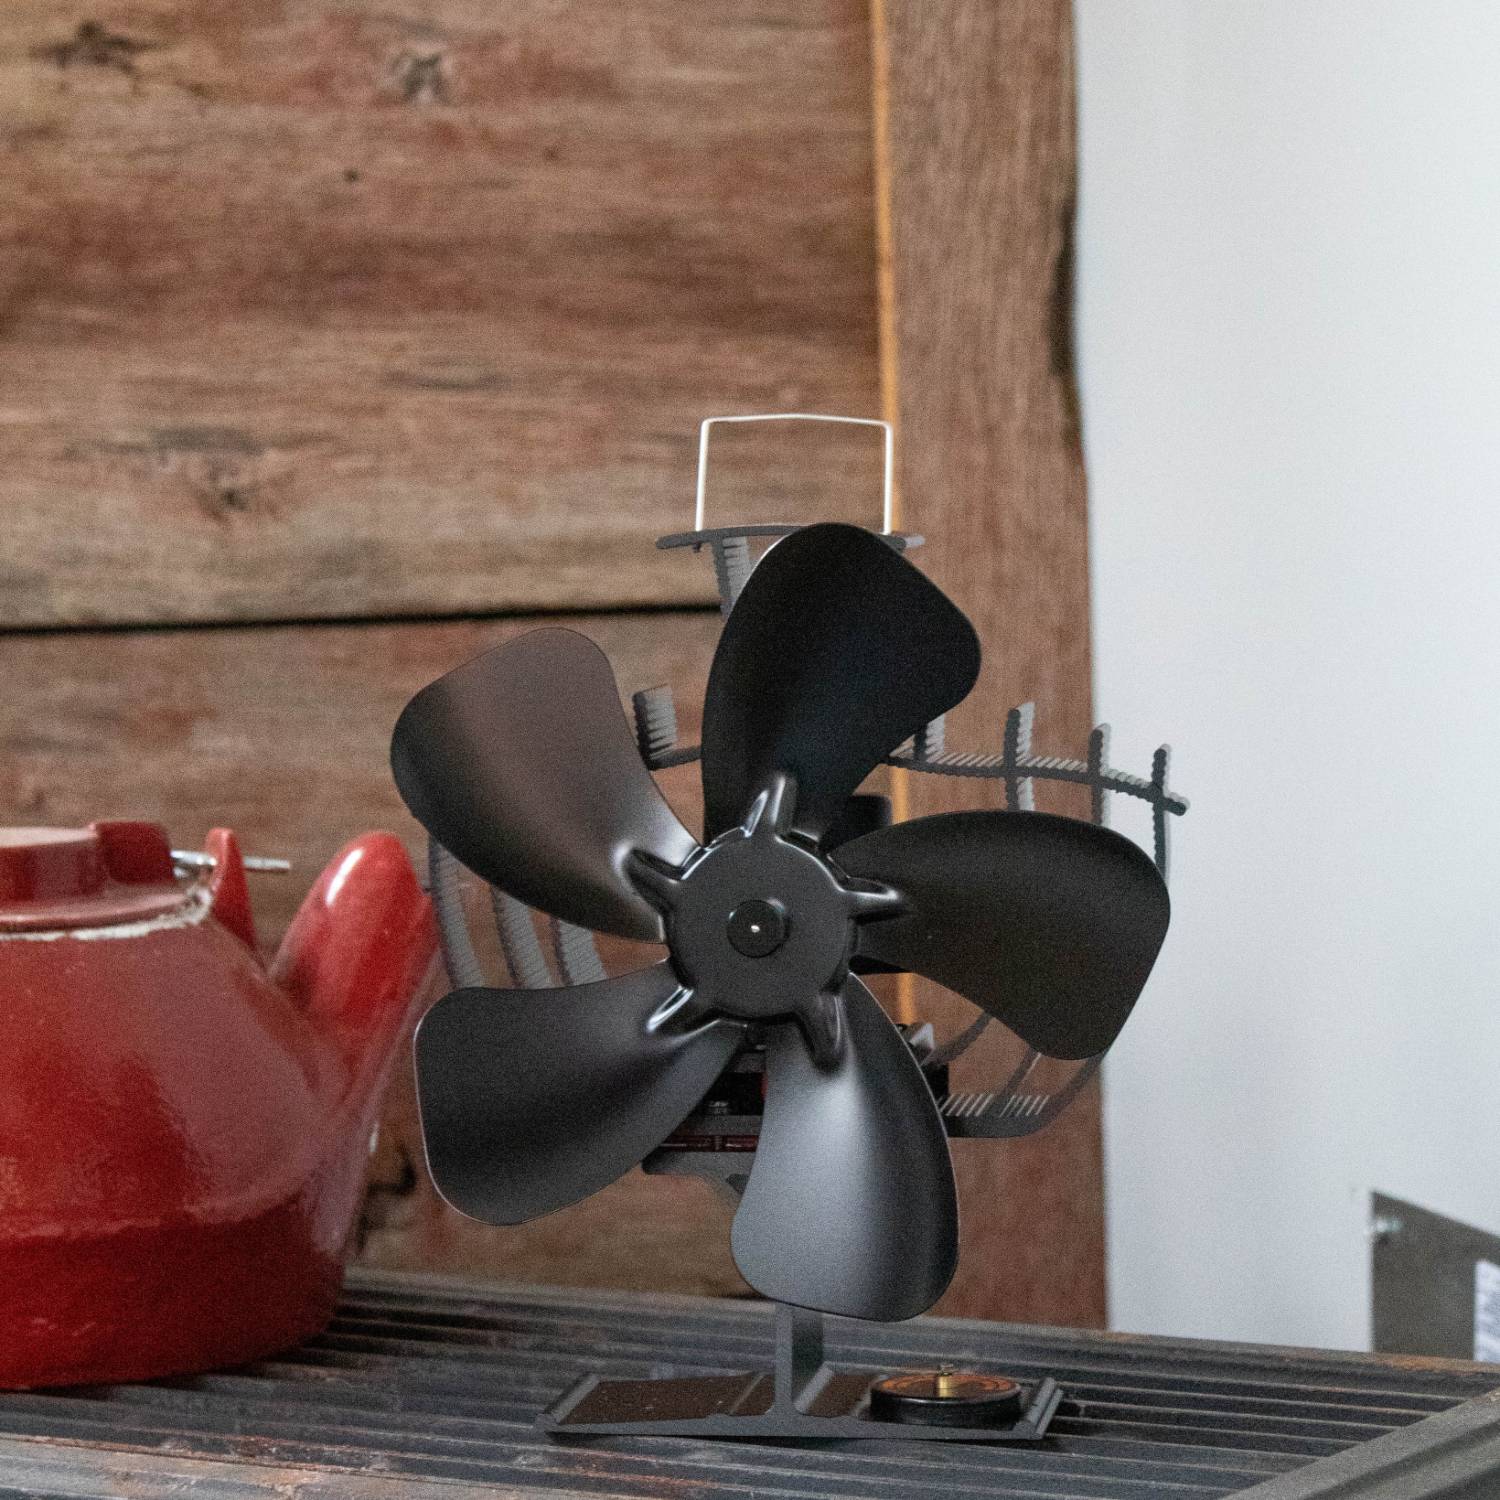 Lehman's Heat-Powered Oscillating Stove Fan